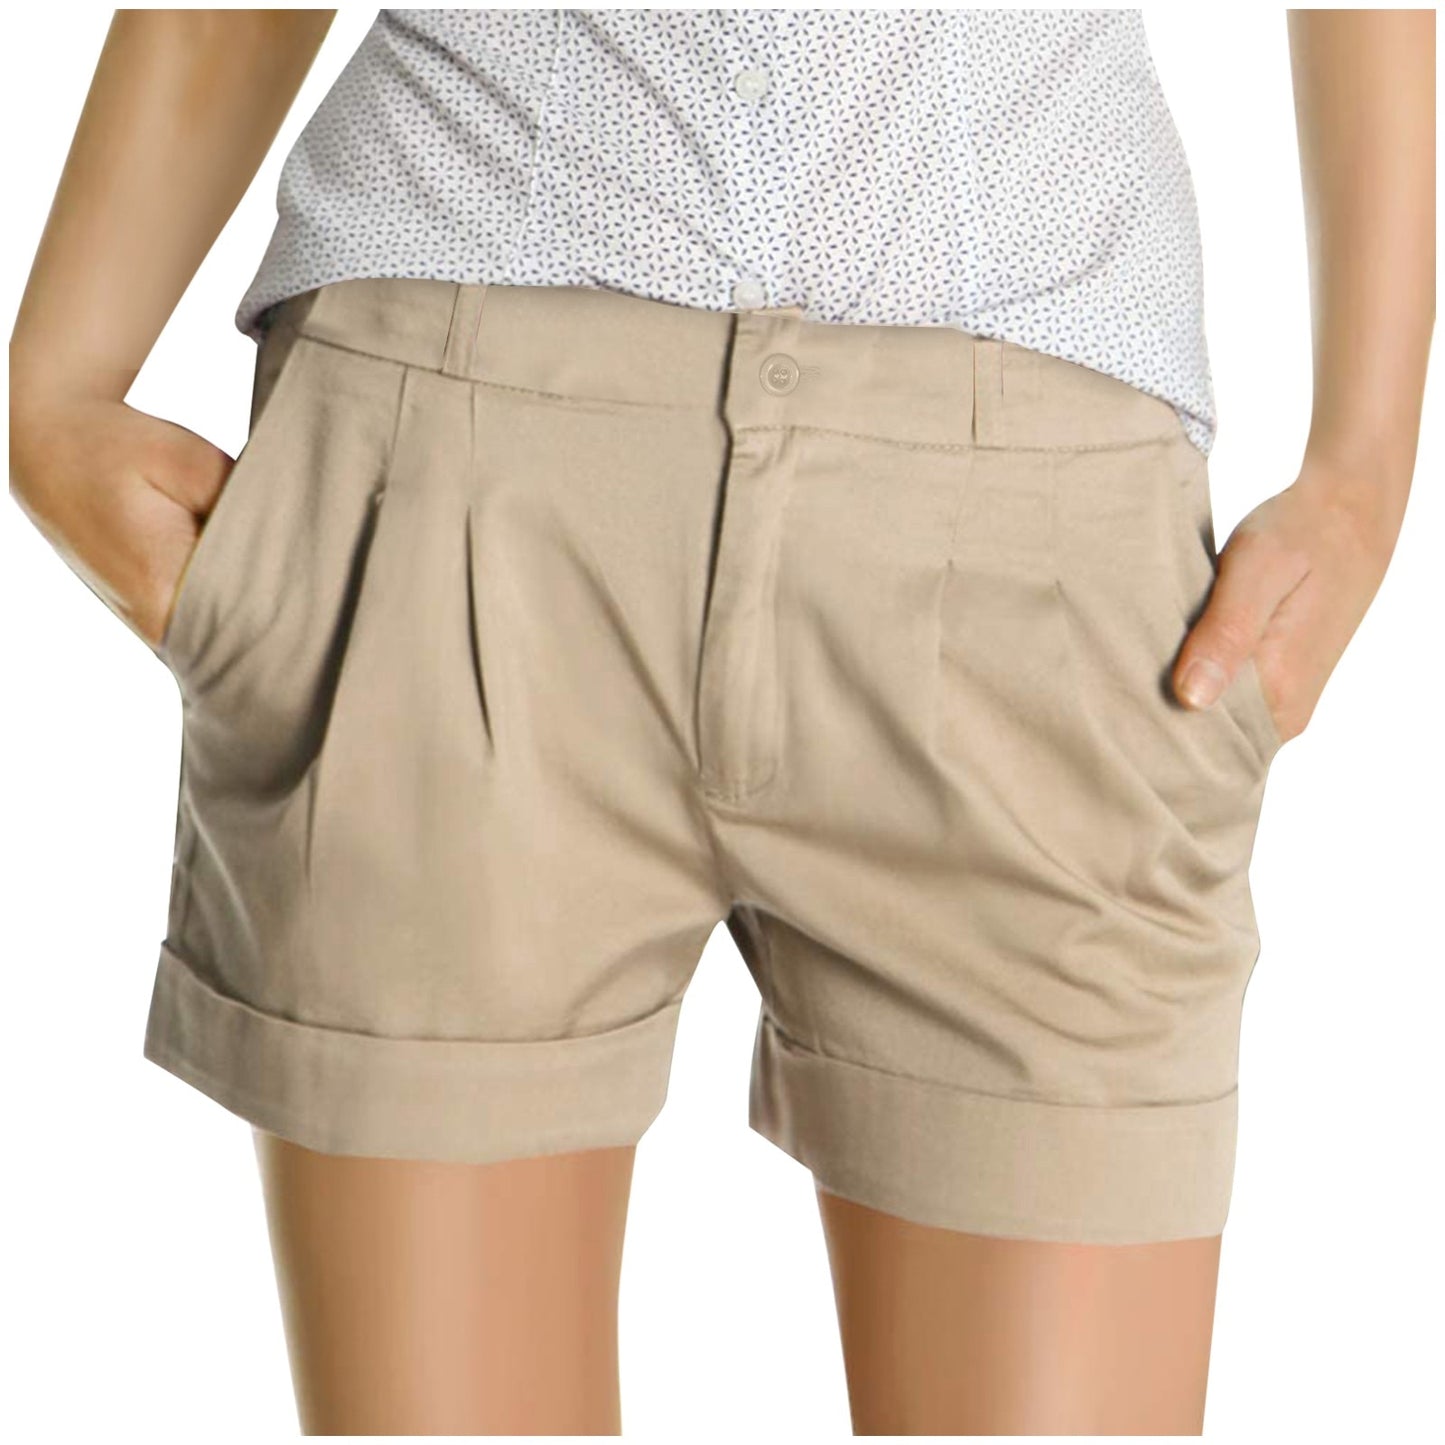 Pleated Shorts